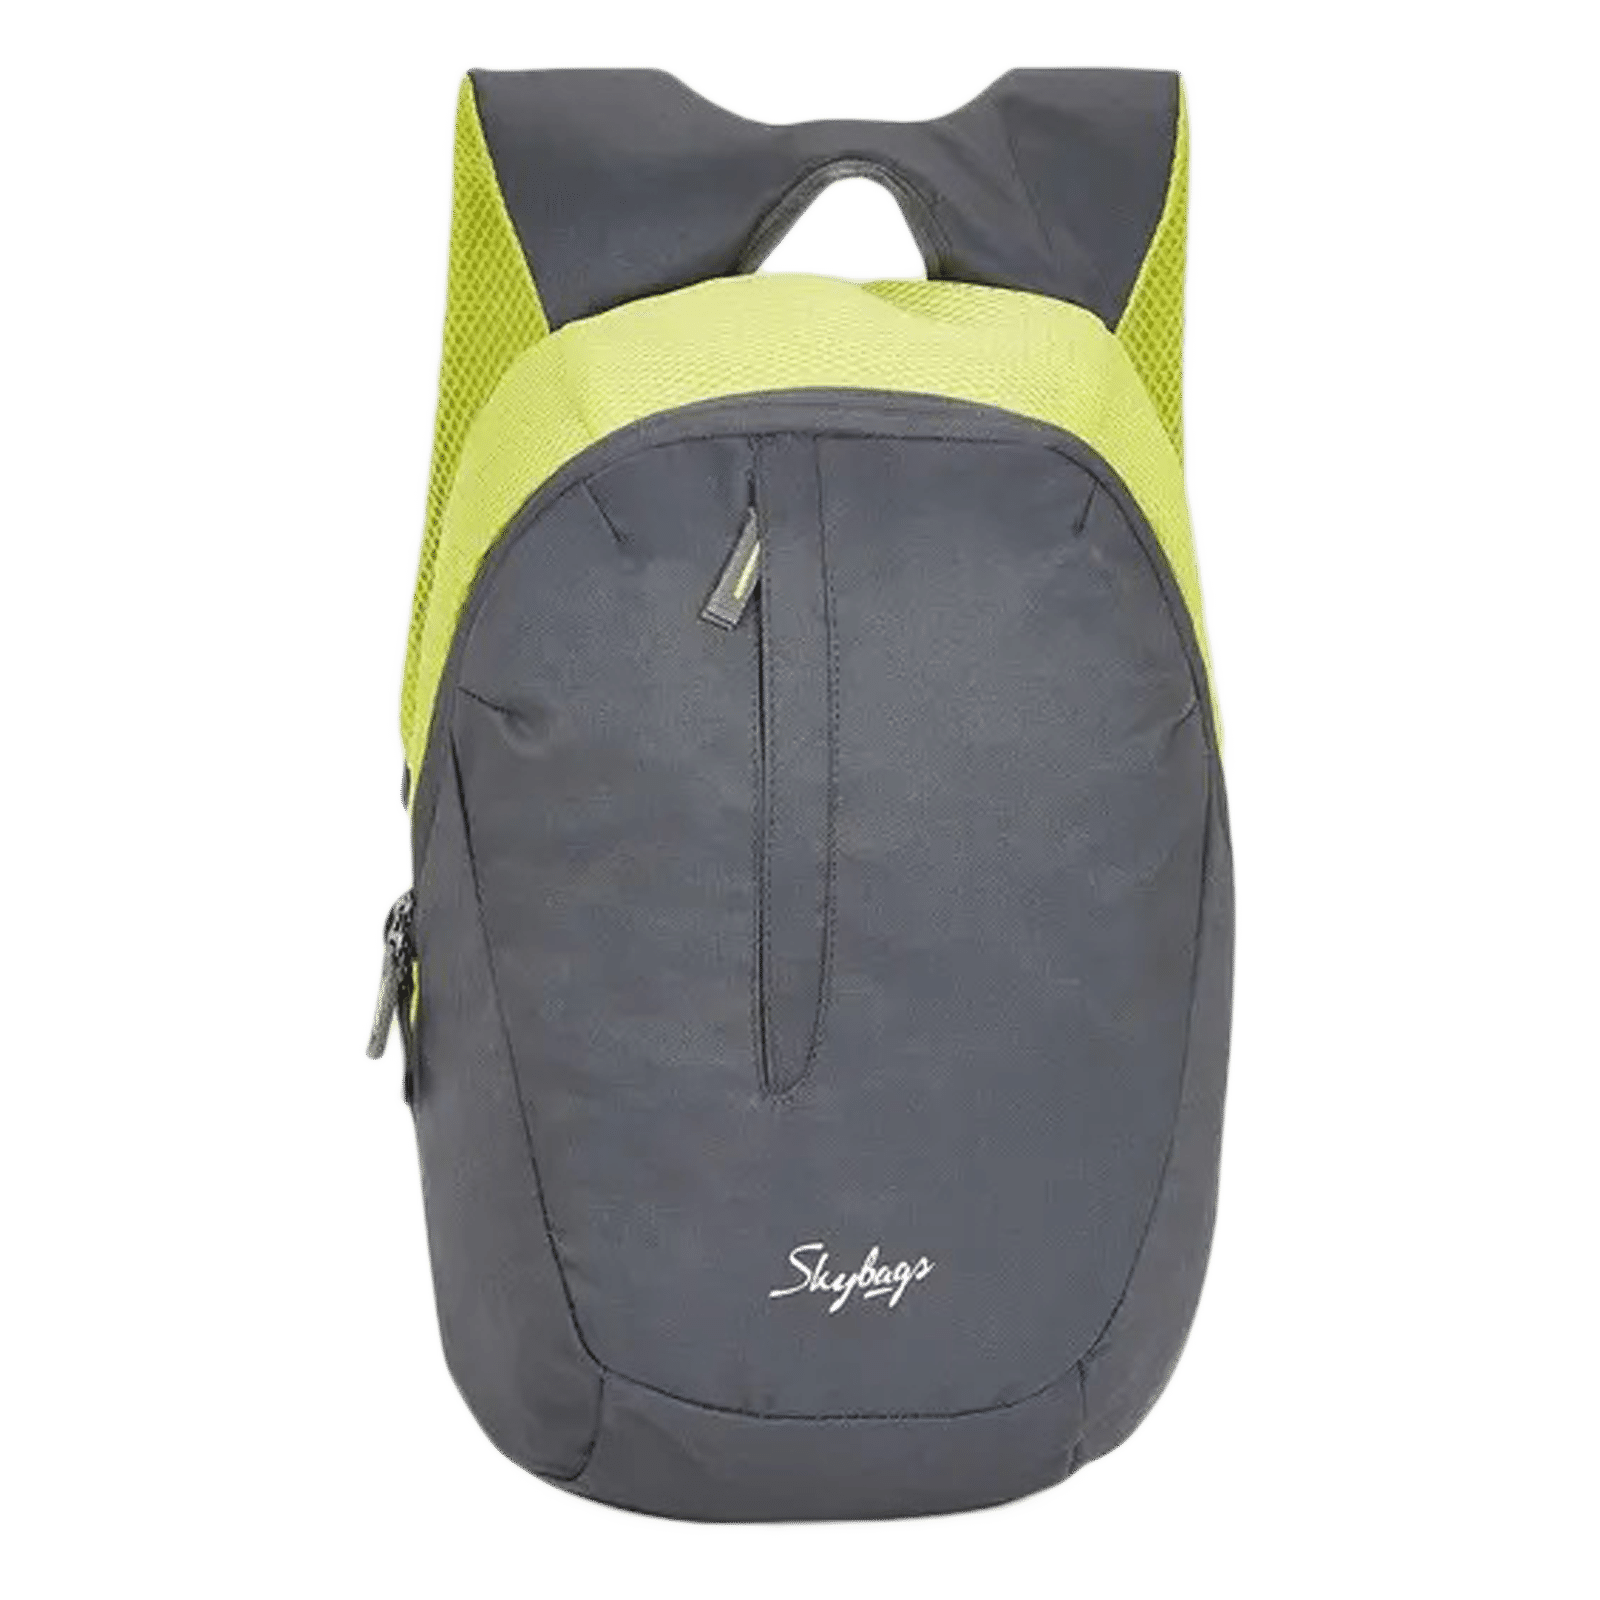 3% OFF on Skybags Scout Messenger Bag Black on Flipkart | PaisaWapas.com